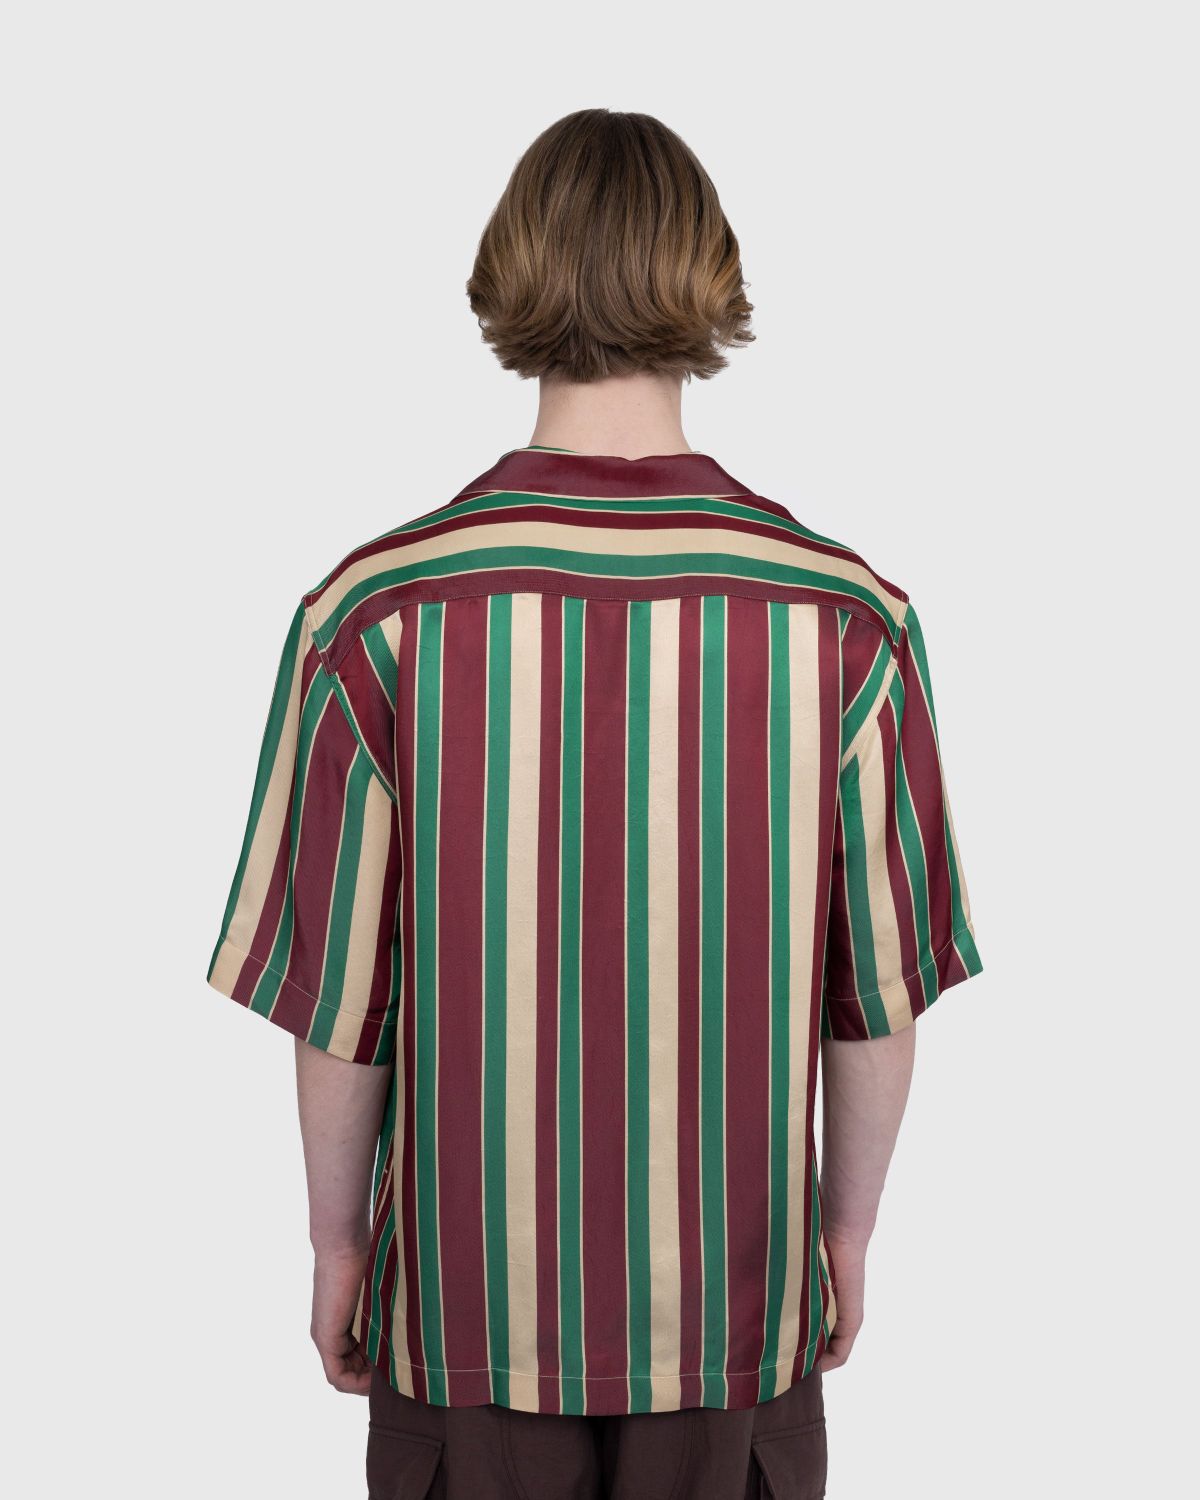 Dries van Noten – Cassi Shirt Bordeaux - Shortsleeve Shirts - Multi - Image 3